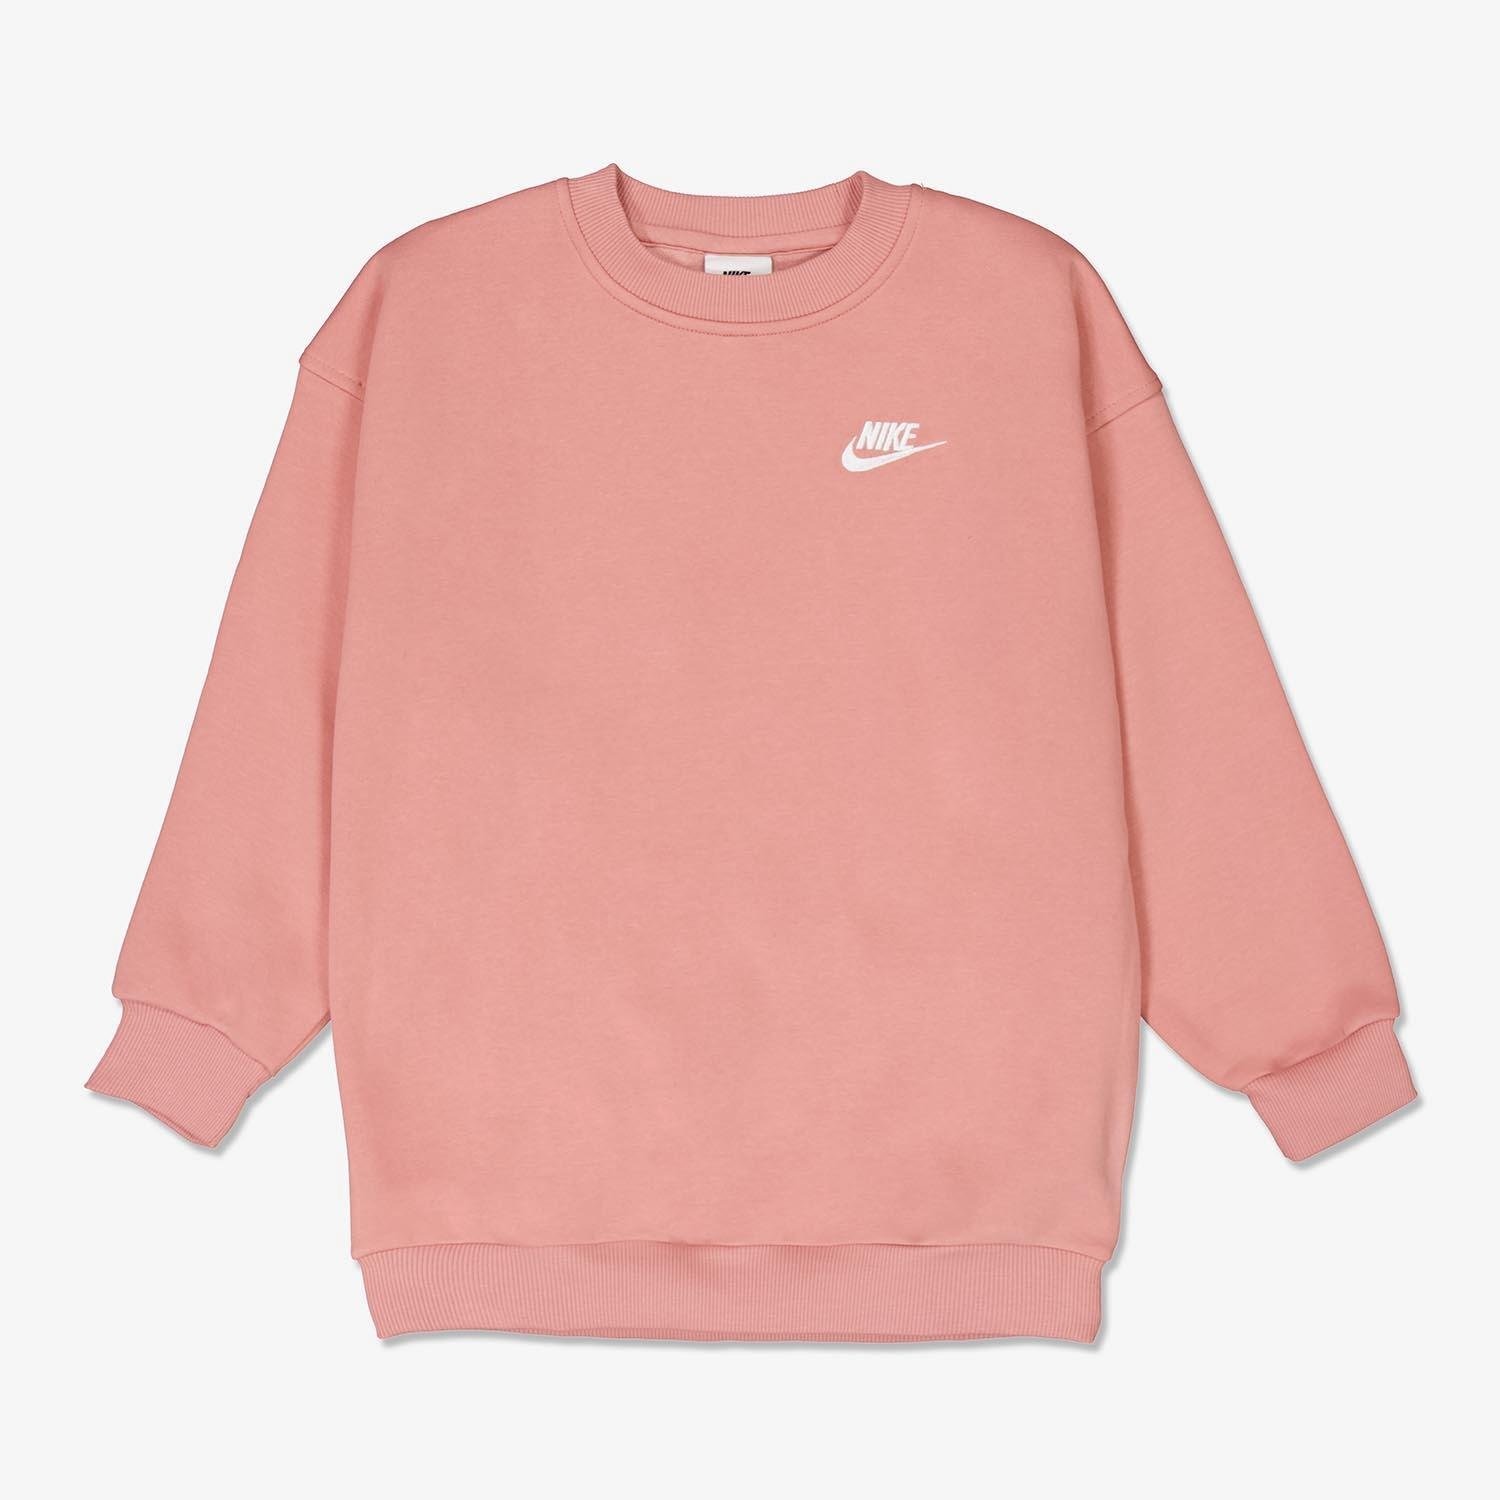 Nike Nike sweater roze kinderen kinderen